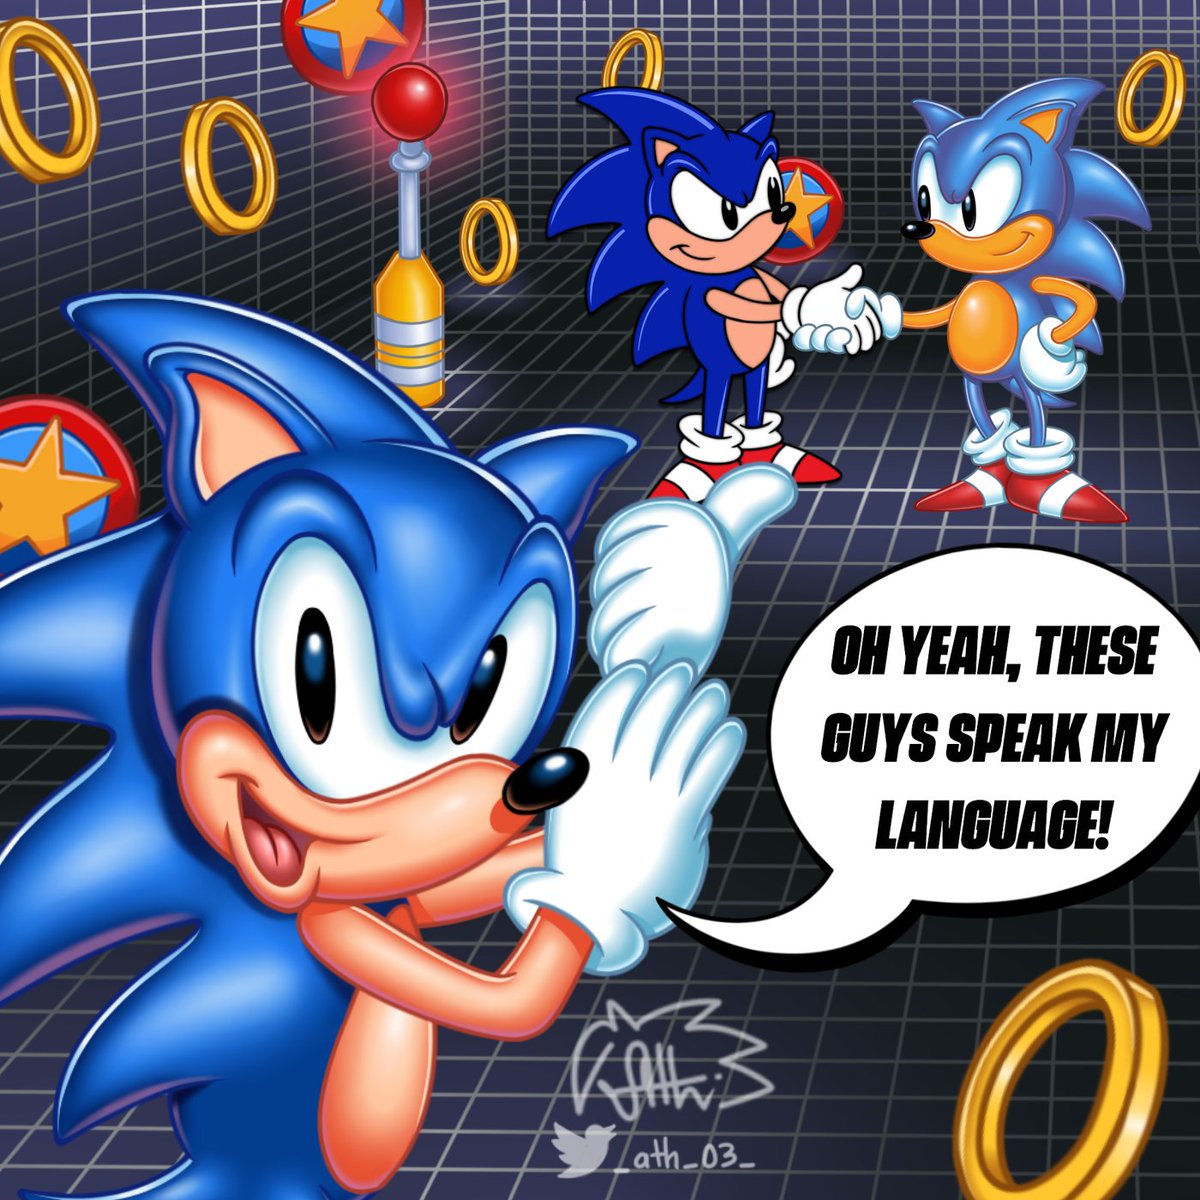 The American Sonic Gathering
#Sonic #SonicTheHedgehog #americansonic #gregmartinsonic #aosth #adventuresofsonicthehedgehog